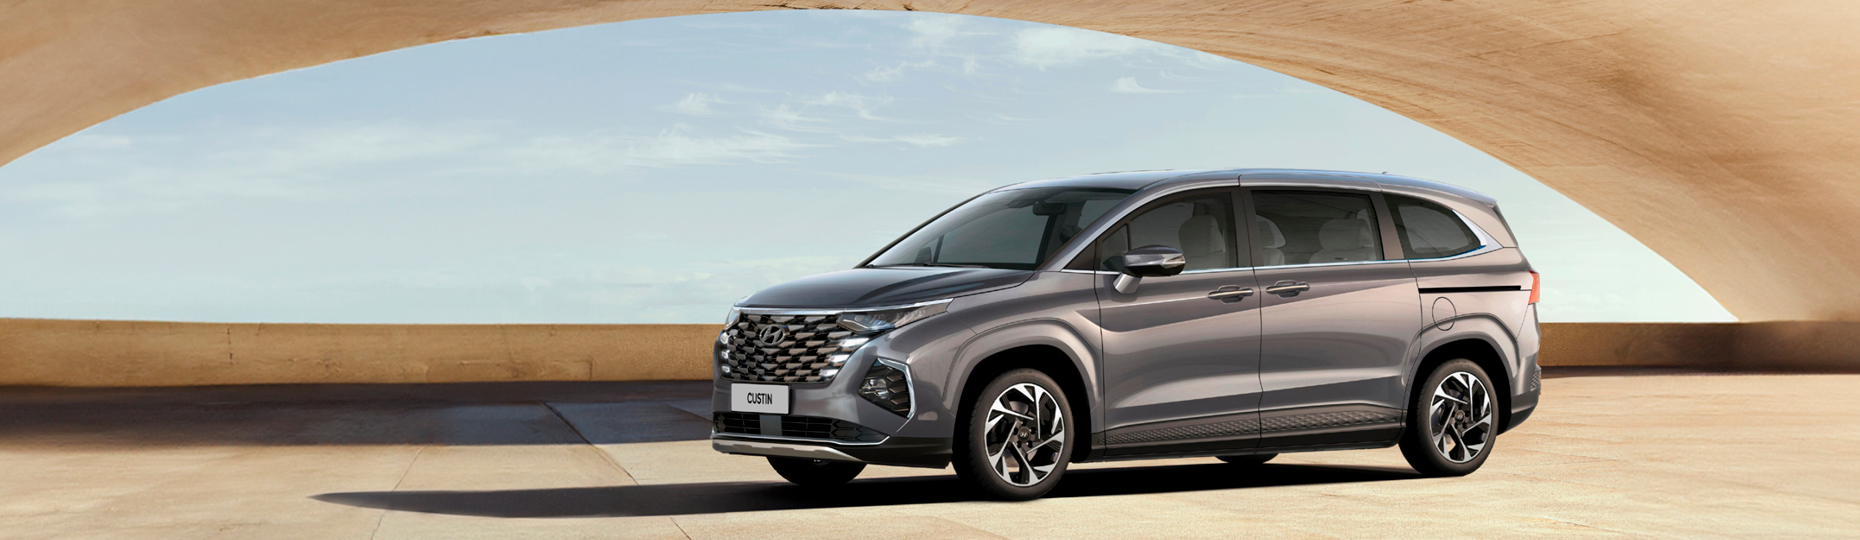 Технические характеристики Hyundai Custin - «Hyundai Premium Al-Farabi»